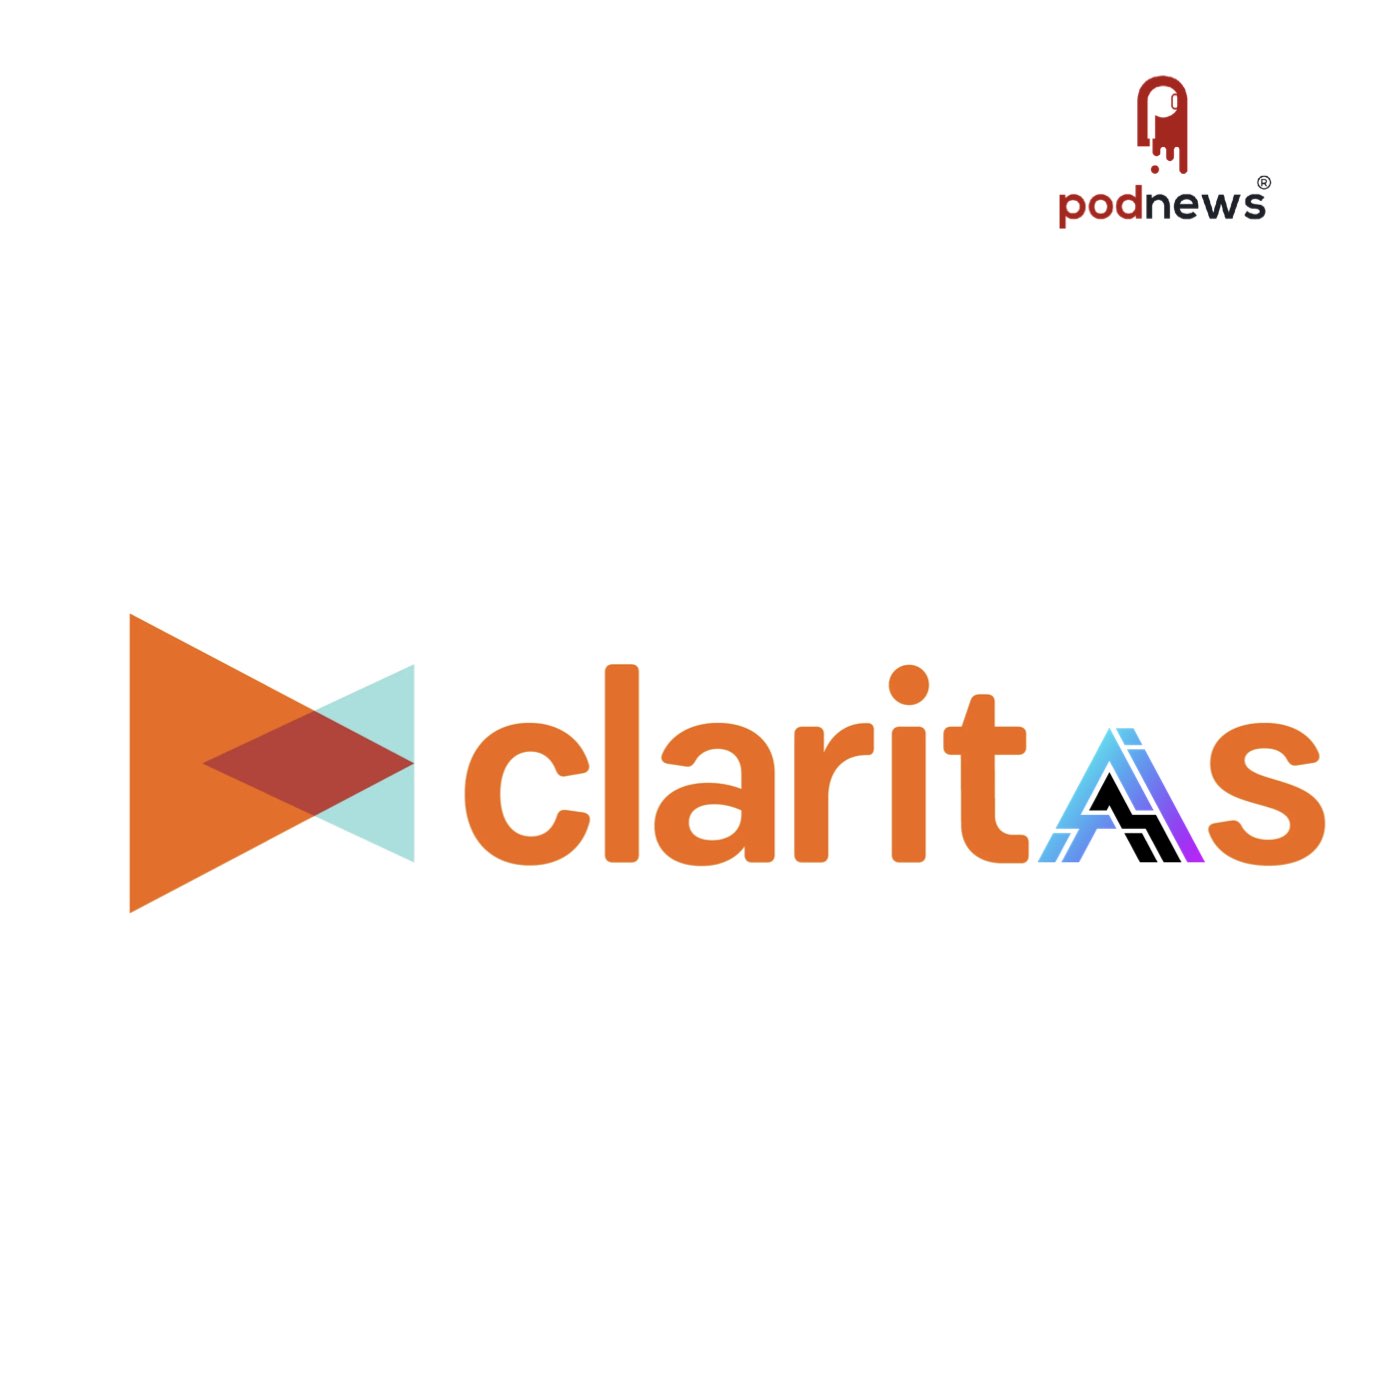 Adtech consolidation: Claritas buys ArtsAI